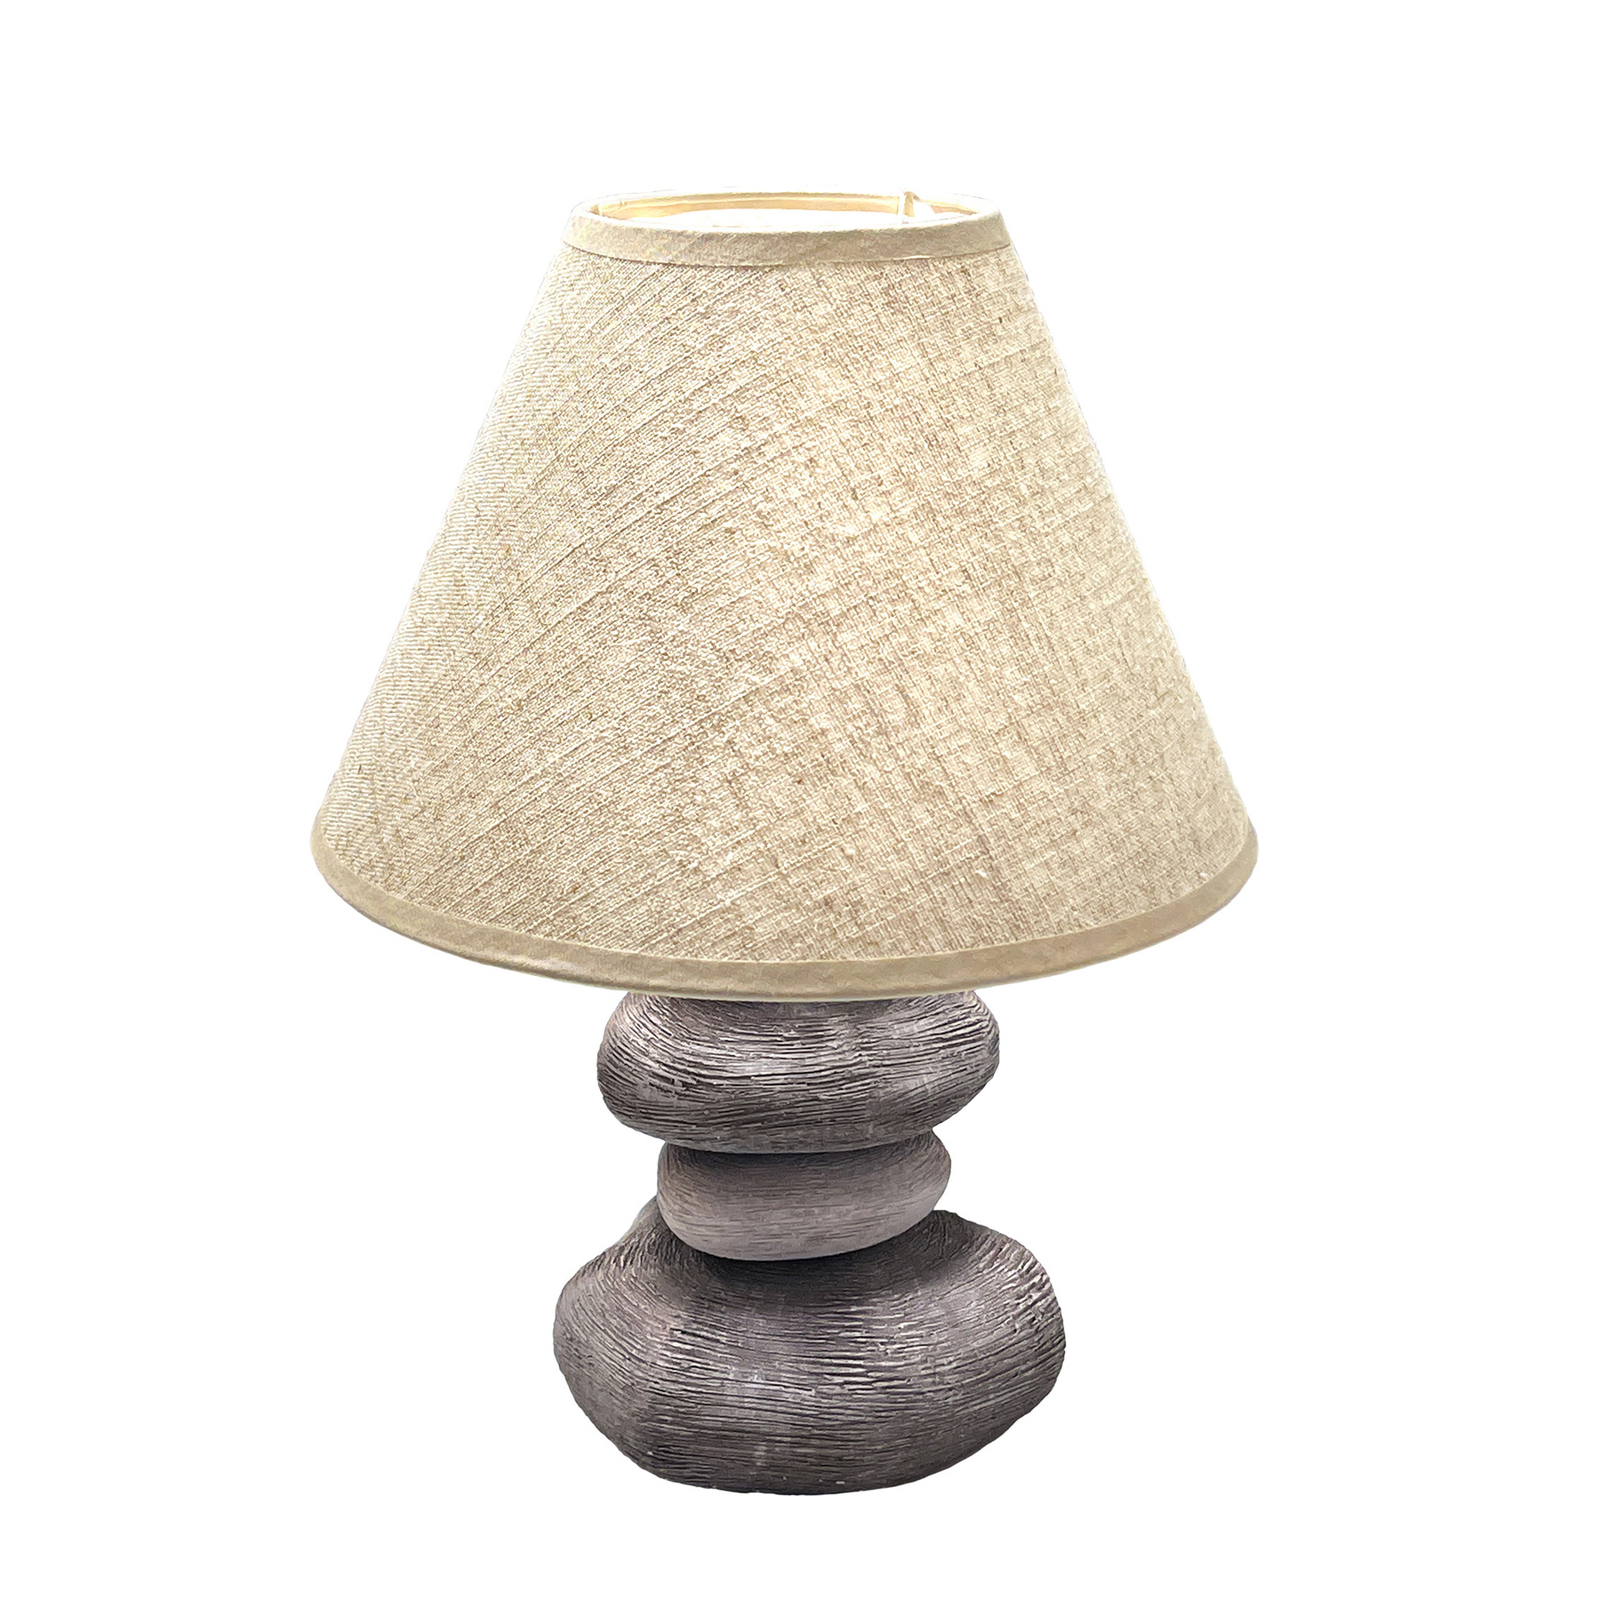 Bella table lamp, height 33.5cm brown/light brown